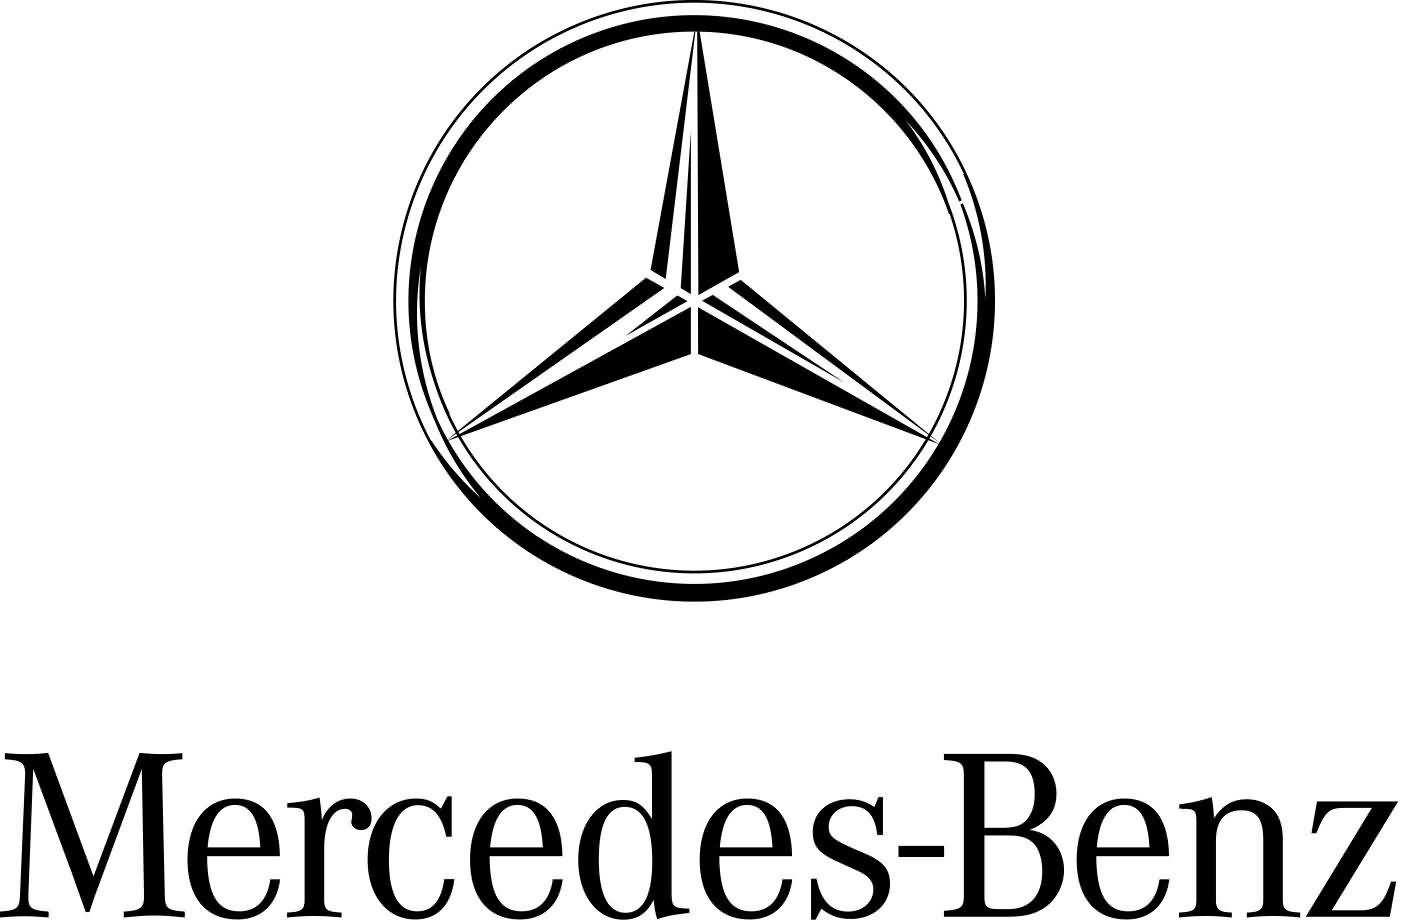 Daimler Car Logo - Mercedes Logo, Mercedes Benz Car Symbol Meaning And History. Car